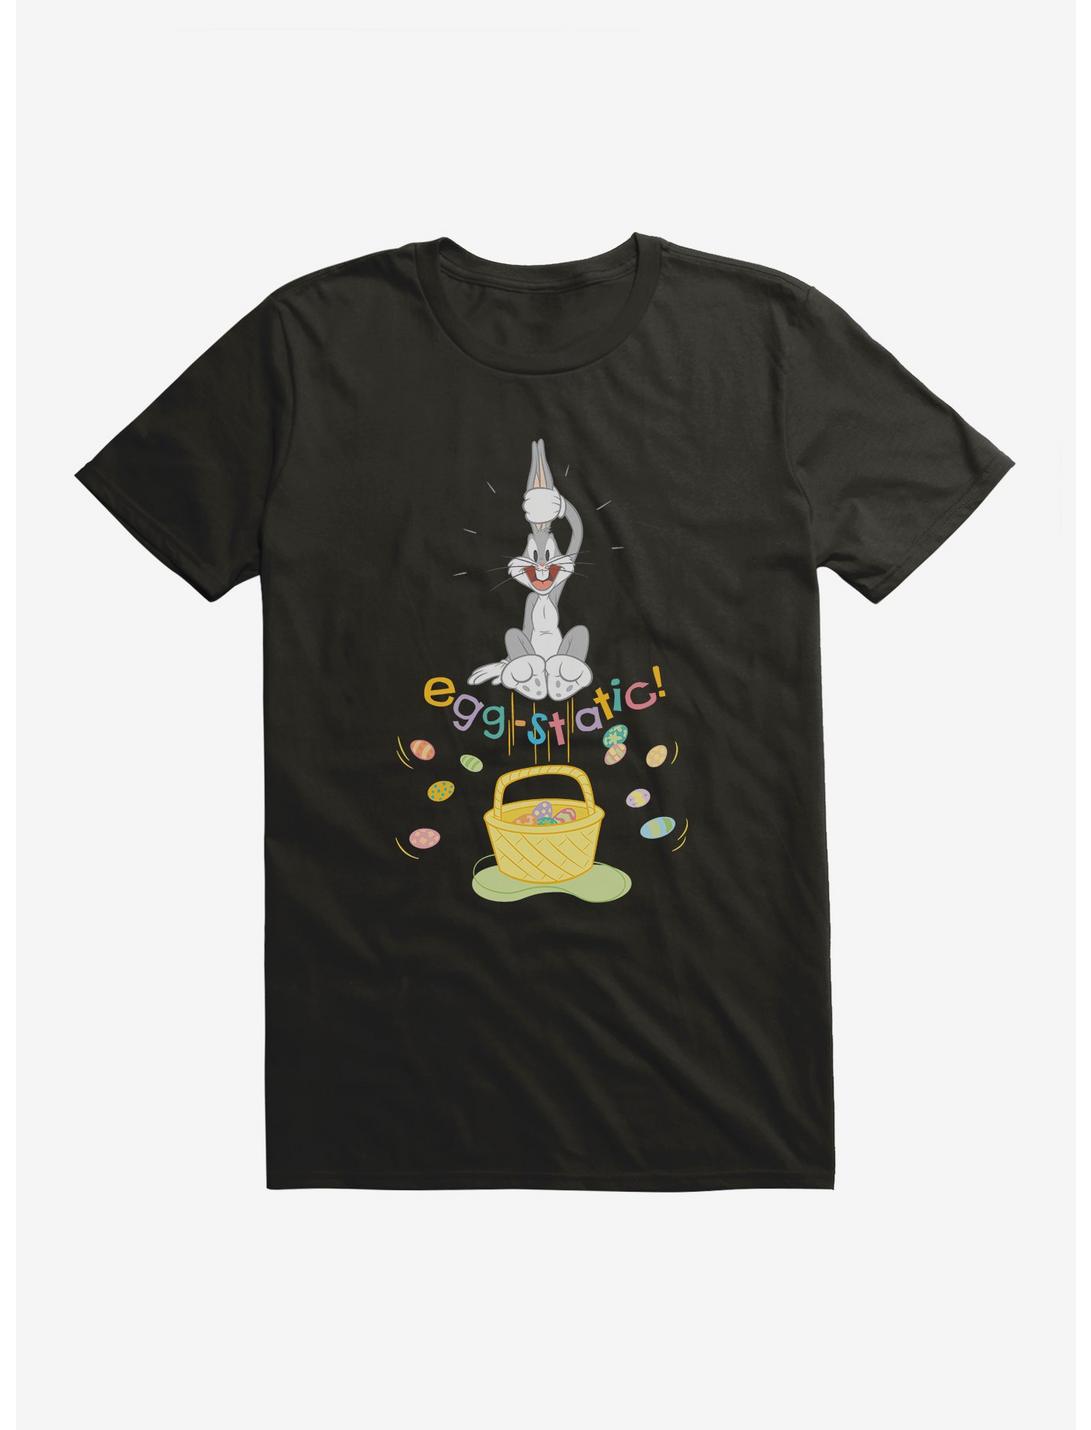 Looney Tunes Easter Bugs Bunny Egg-Static! T-Shirt, BLACK, hi-res